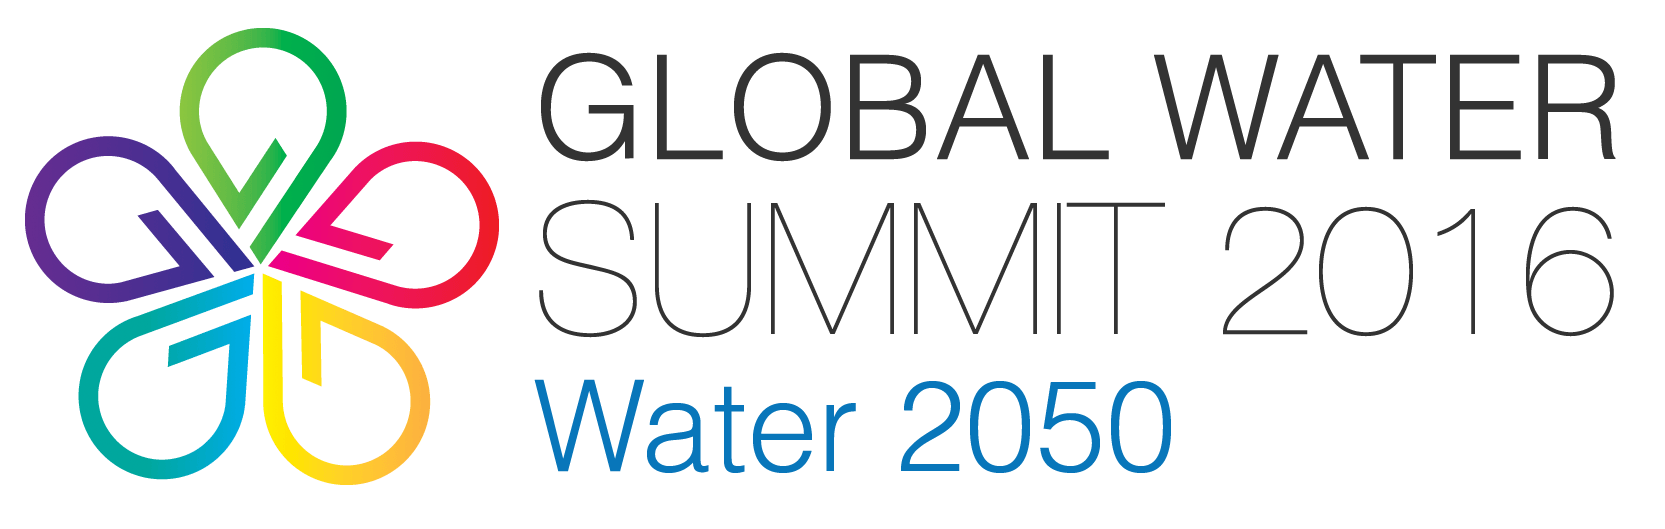 Global Water Summit 2016